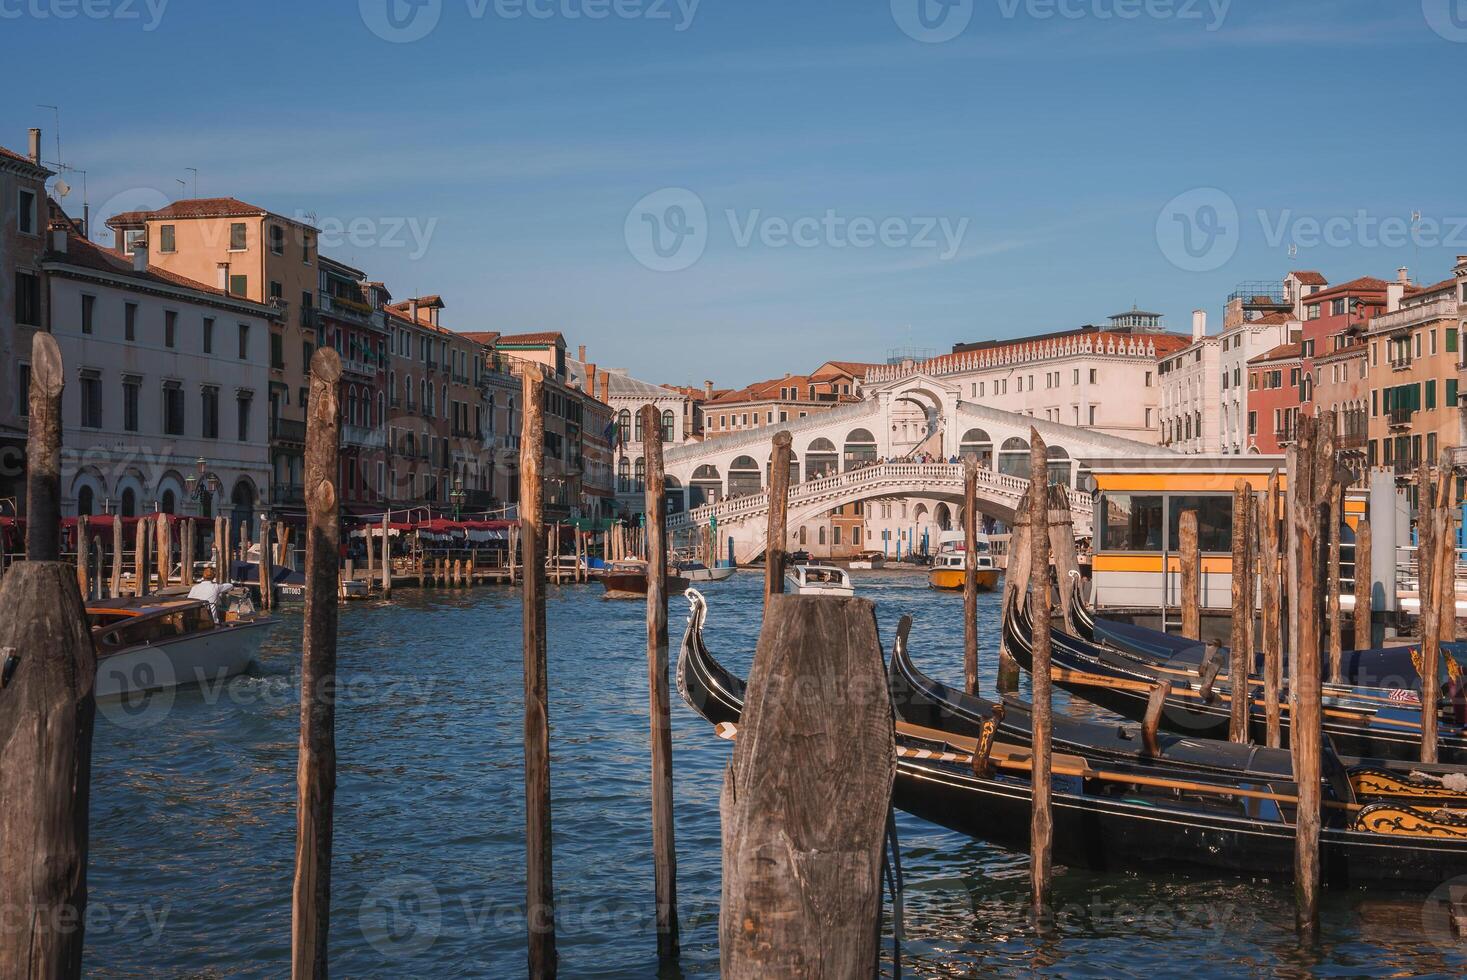 cênico grande canal Visão com ancorado gôndolas dentro Veneza, Itália - icônico via fluvial charme foto